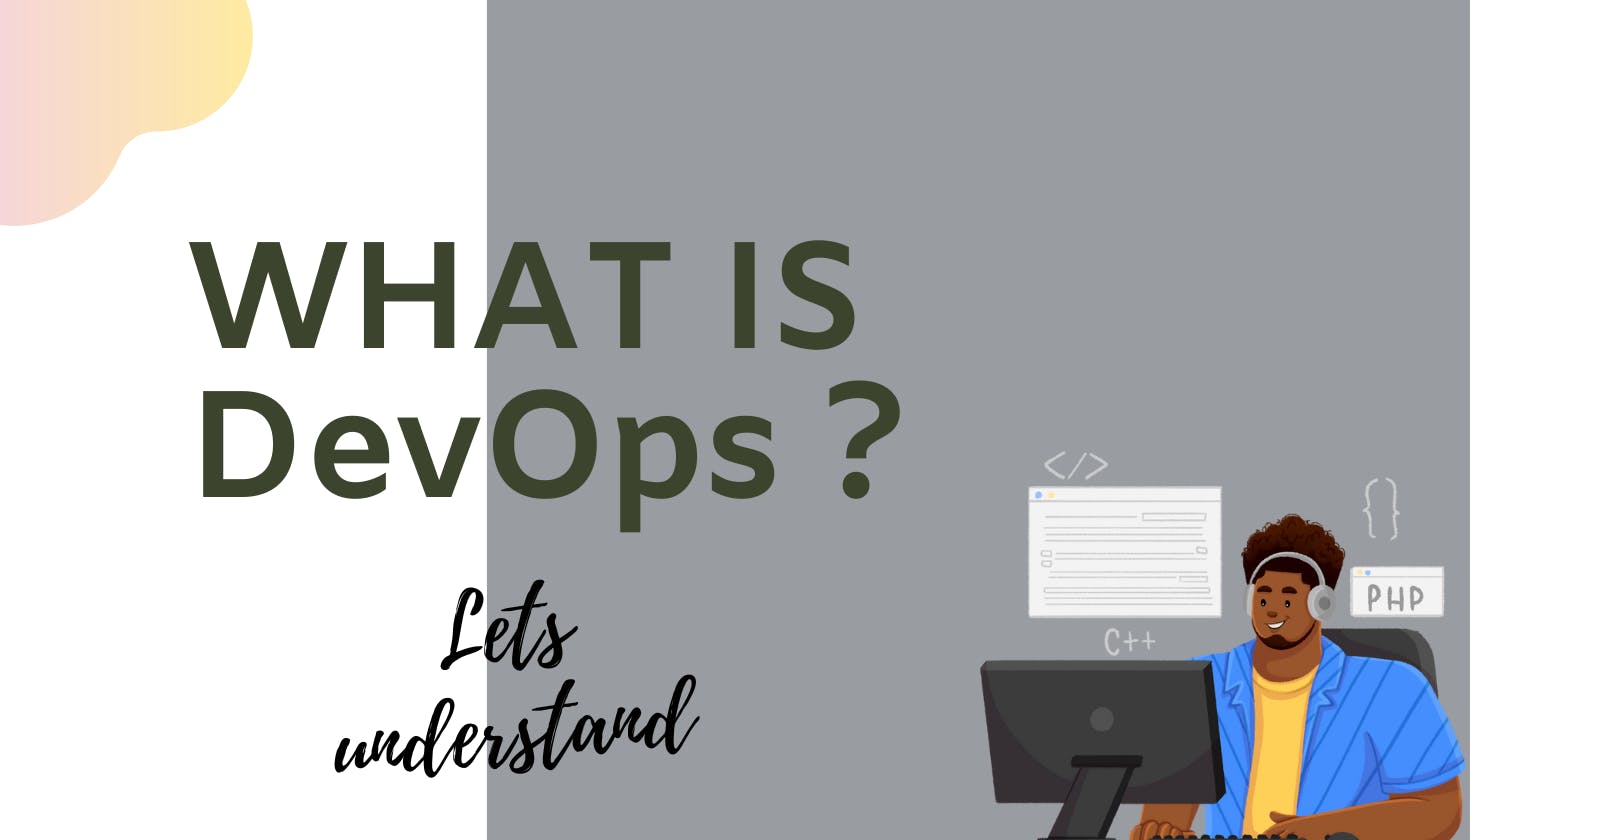 Understanding DevOps: A Culture of Continuous Improvement